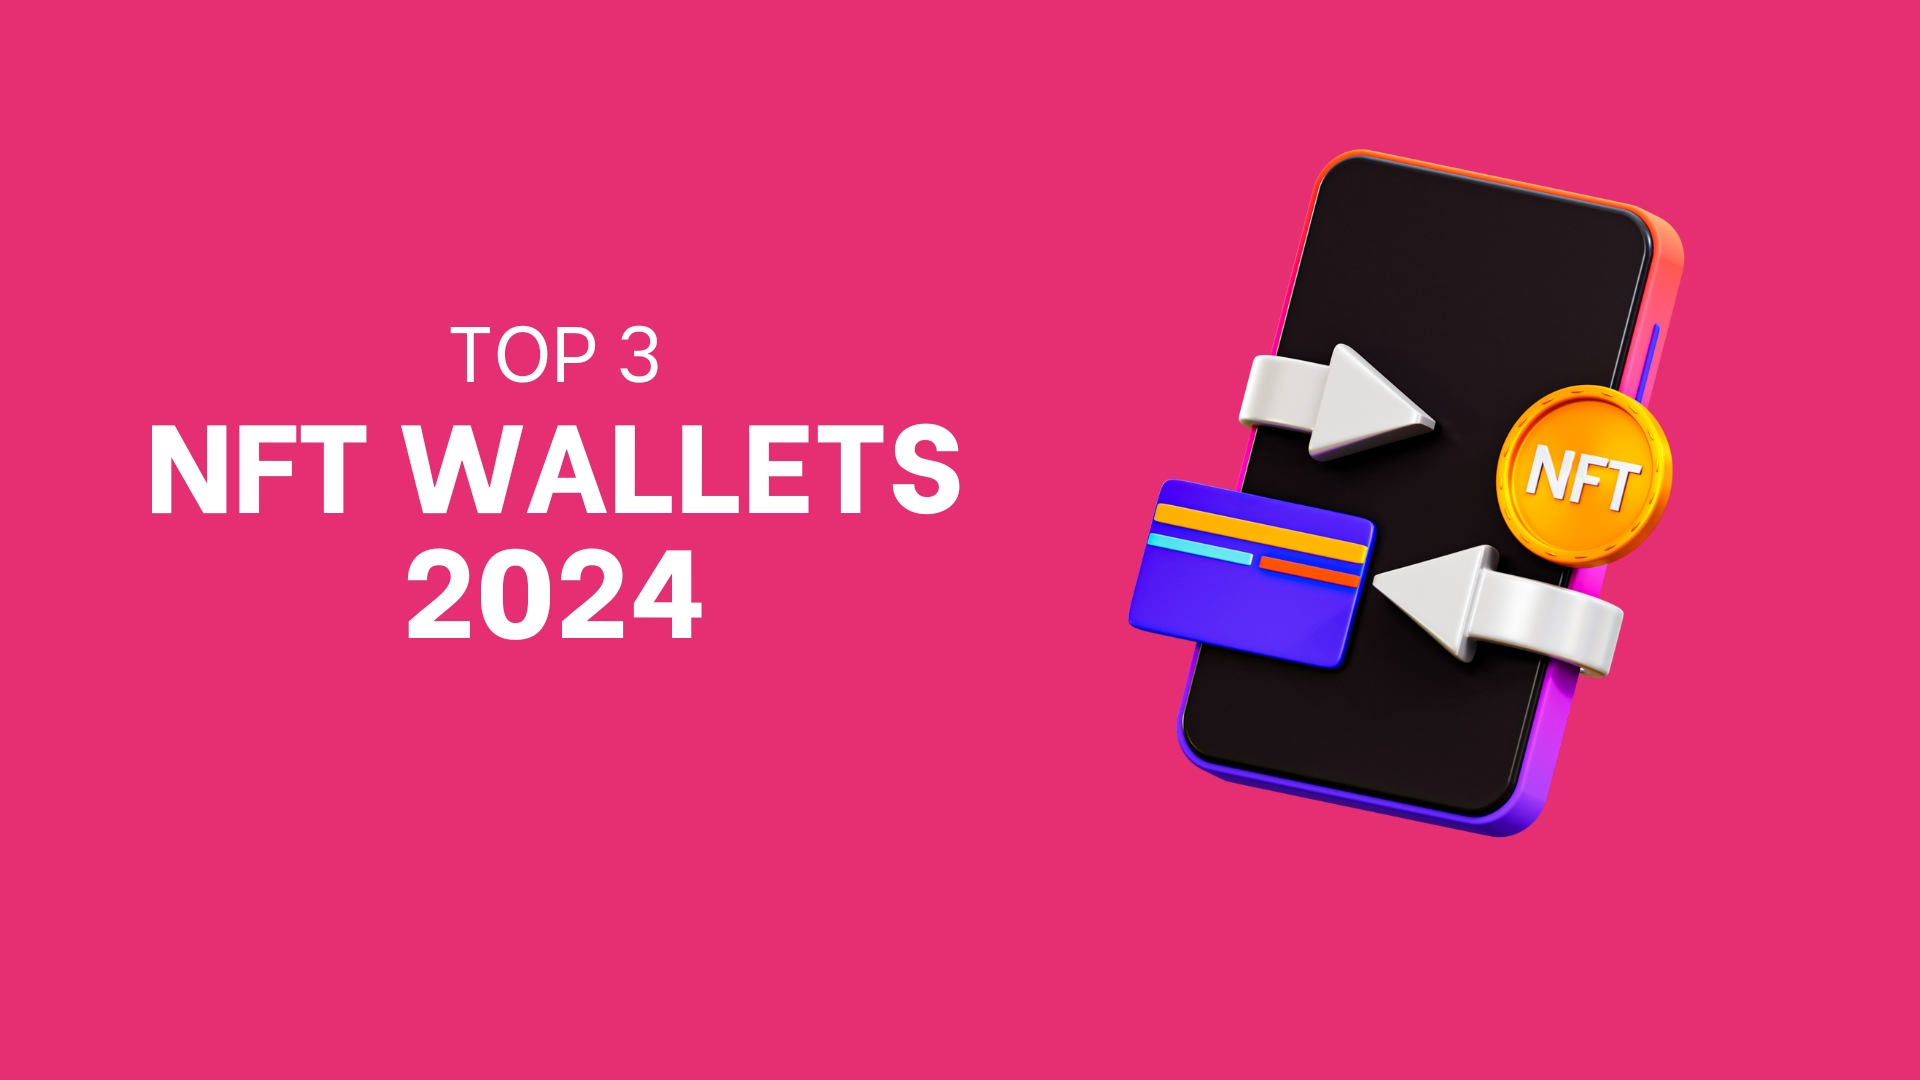 Top 3 NFT wallets in solana 2024